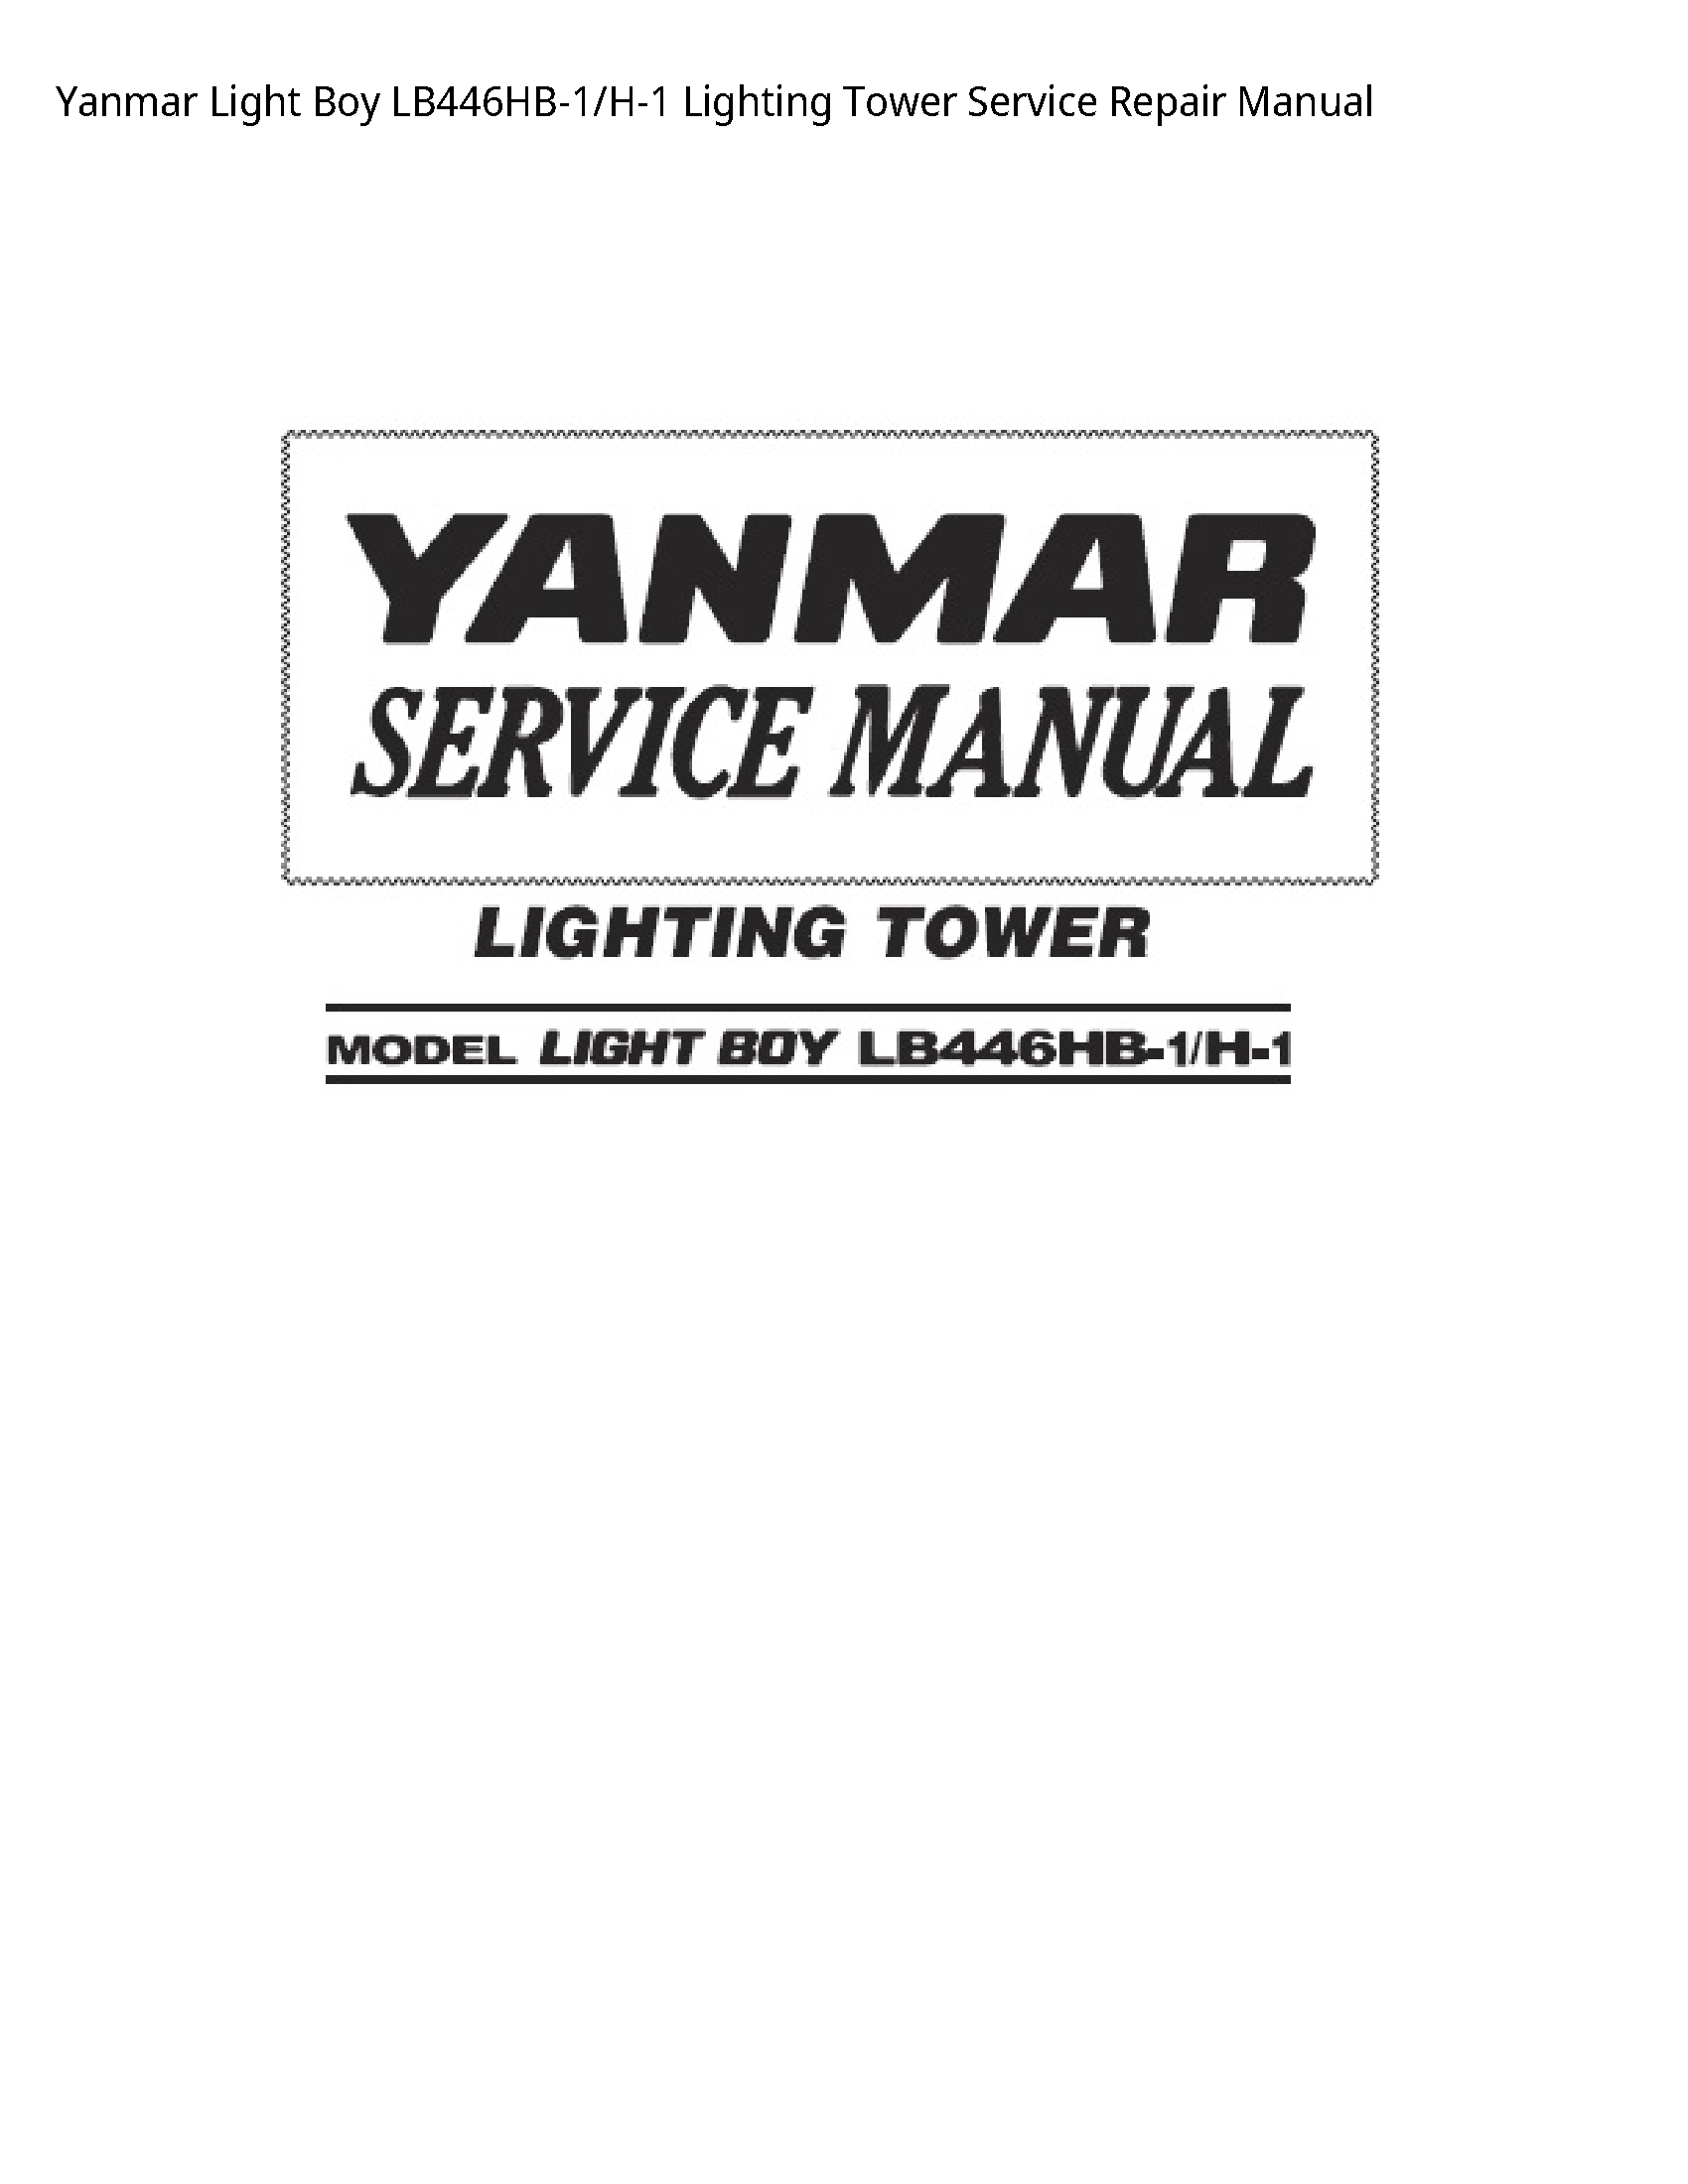 Yanmar LB446HB-1 Light Boy Lighting Tower manual